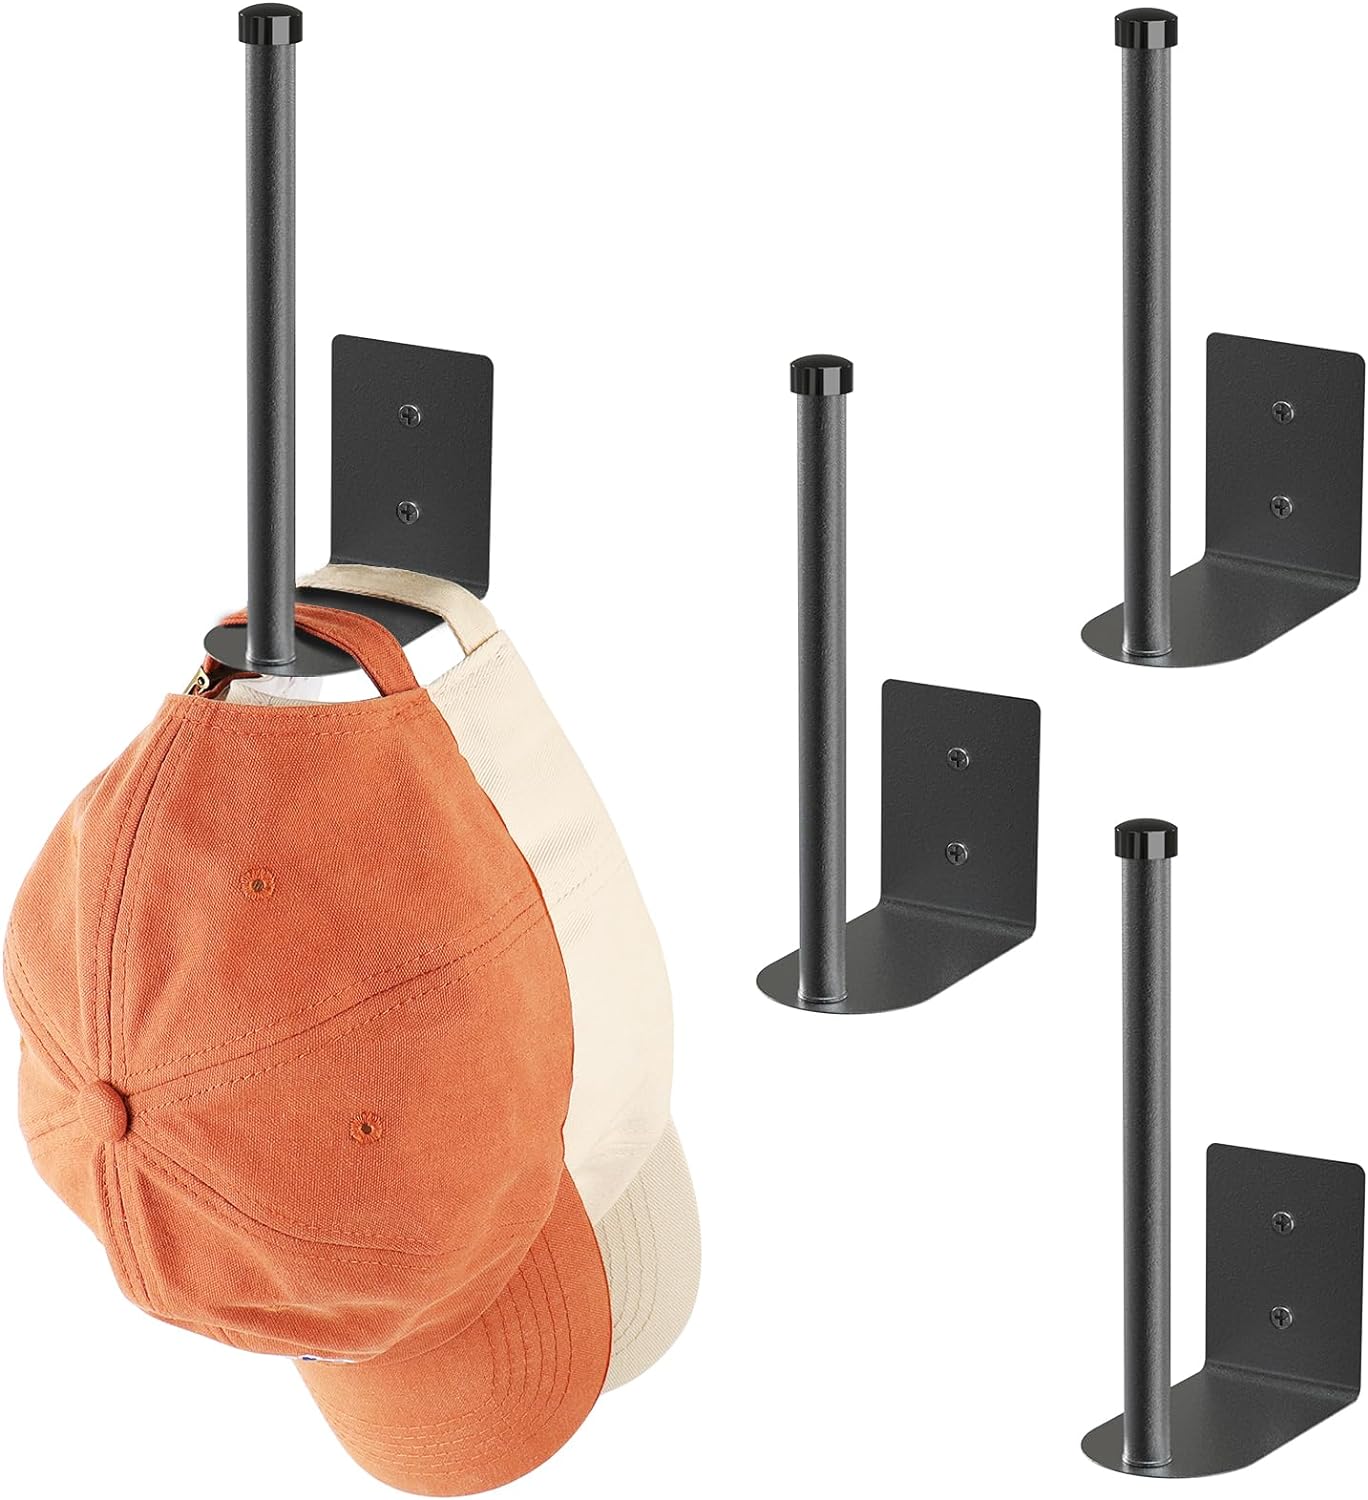 2 Pack Hat Racks for Baseball Caps, Stainless Steel Hat Organizer for Baseball Cap, Hat Holder Storage Organizer, Hat Hanger Strong Adhesive/Wall Drilled for Door,Bedroom,Closet(Black)